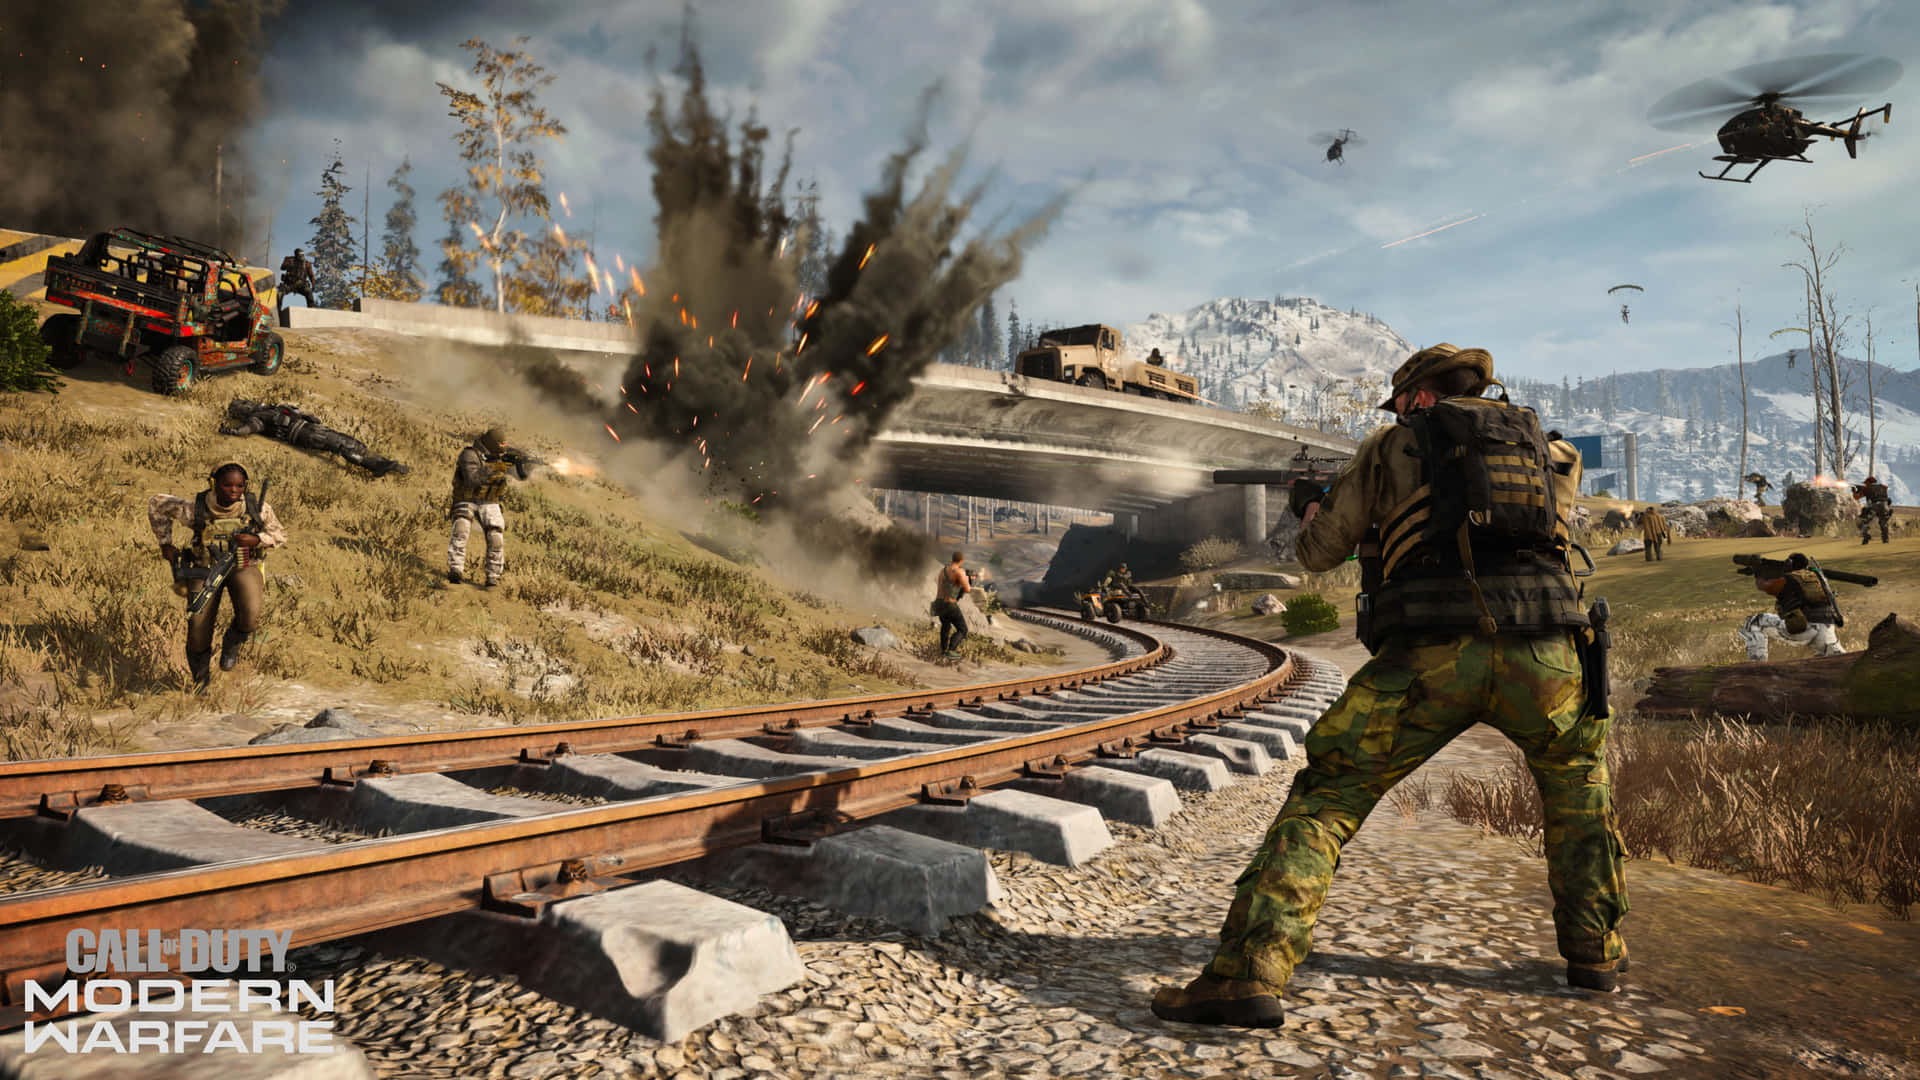 Callof Duty Modern Warfare - Vivi L'epica Guerra